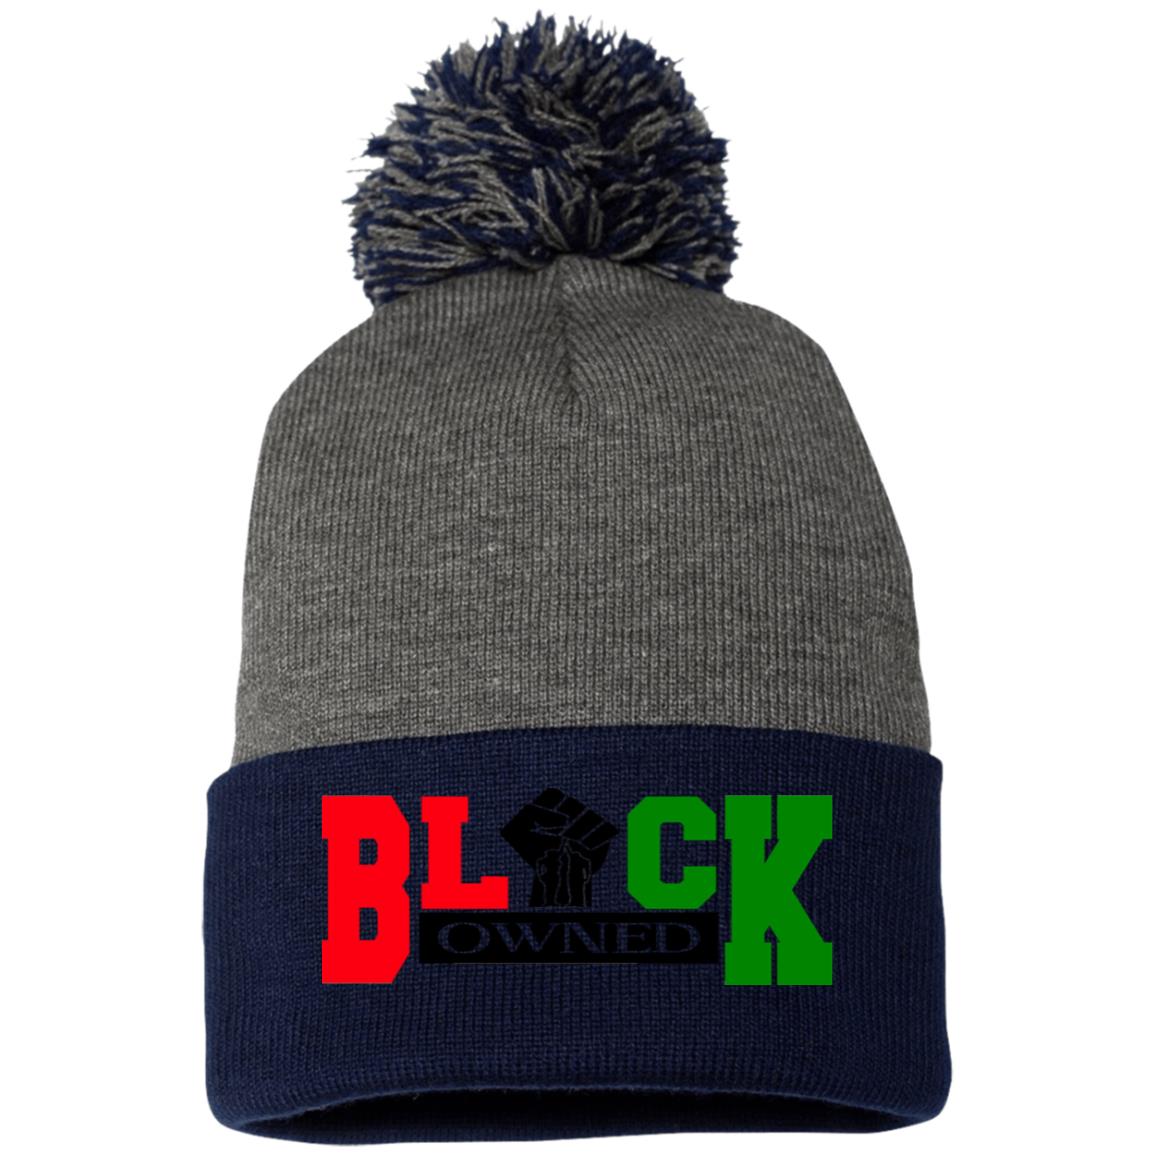 BLACK OWNED RBG Pom Pom Knit Cap